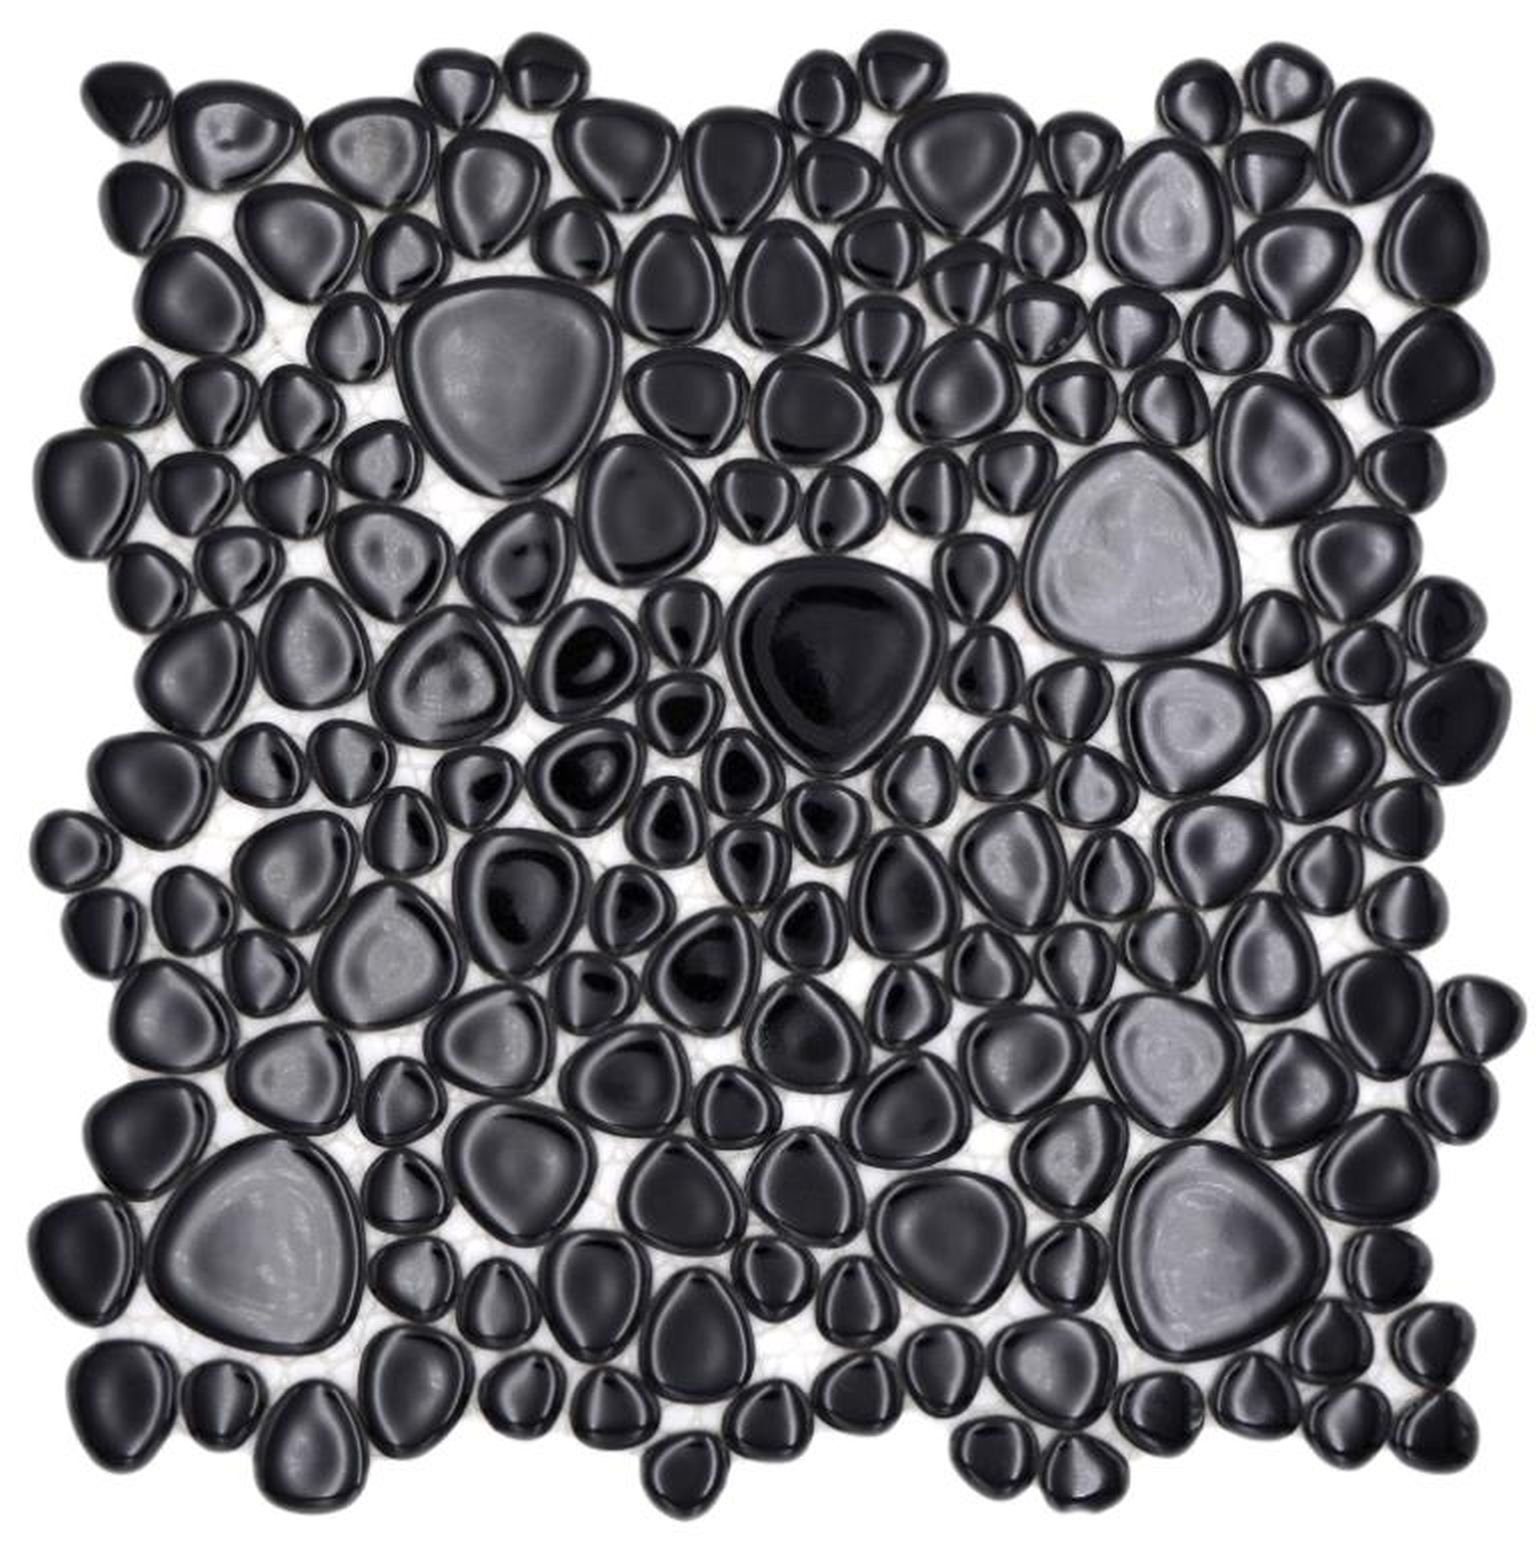 Mosani Mosaikfliesen Oval Keramikmosaik Mosaikfliesen schwarz glänzend / 10 Matten | Fliesen